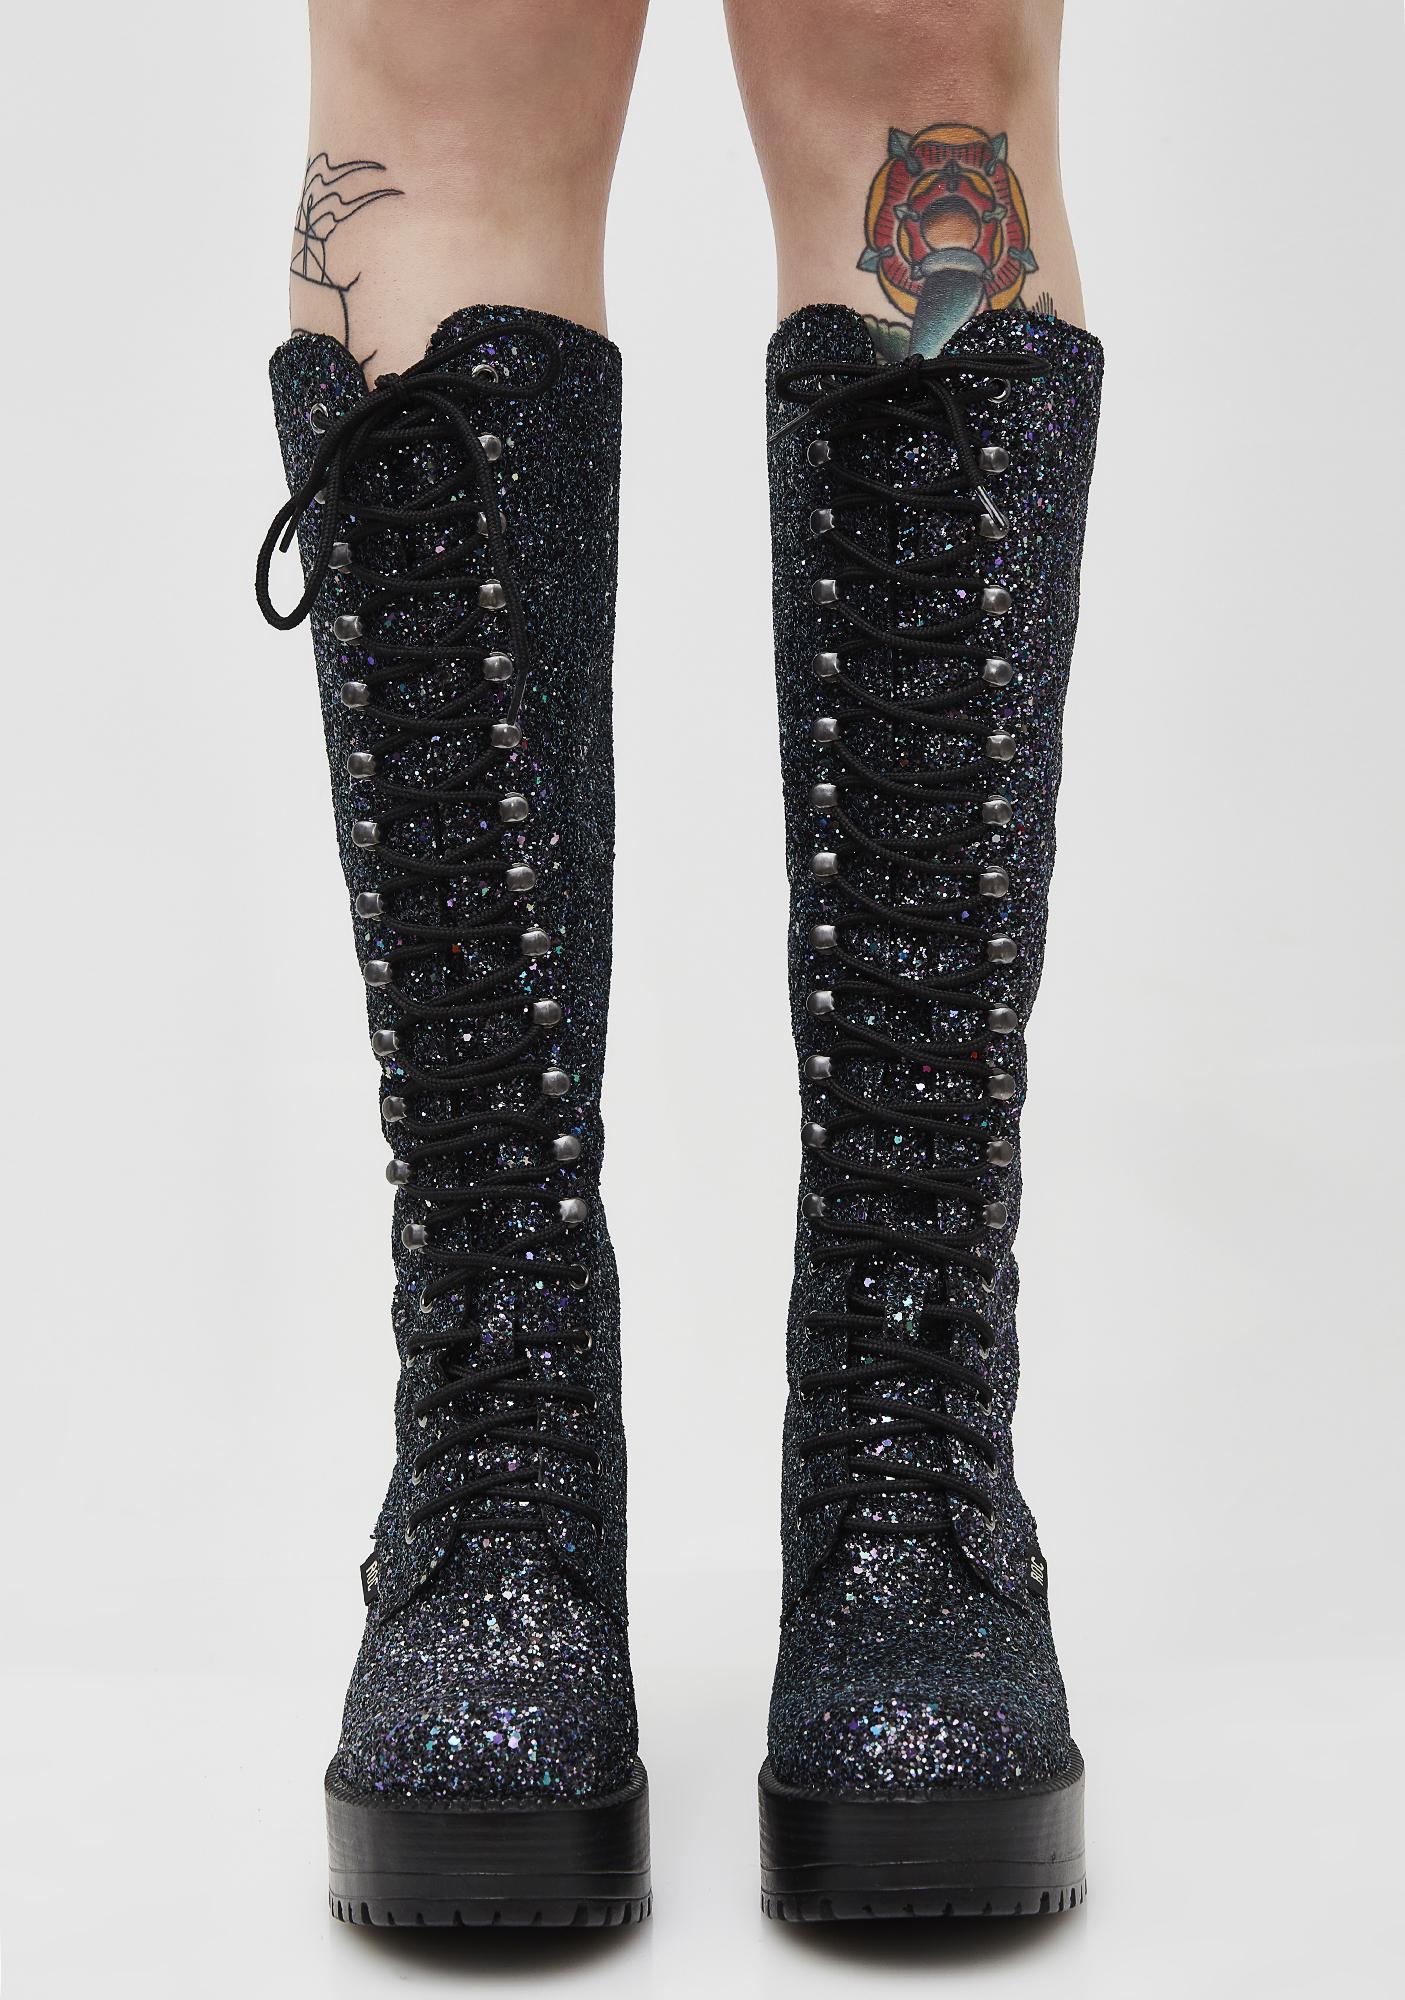 roc glitter boots